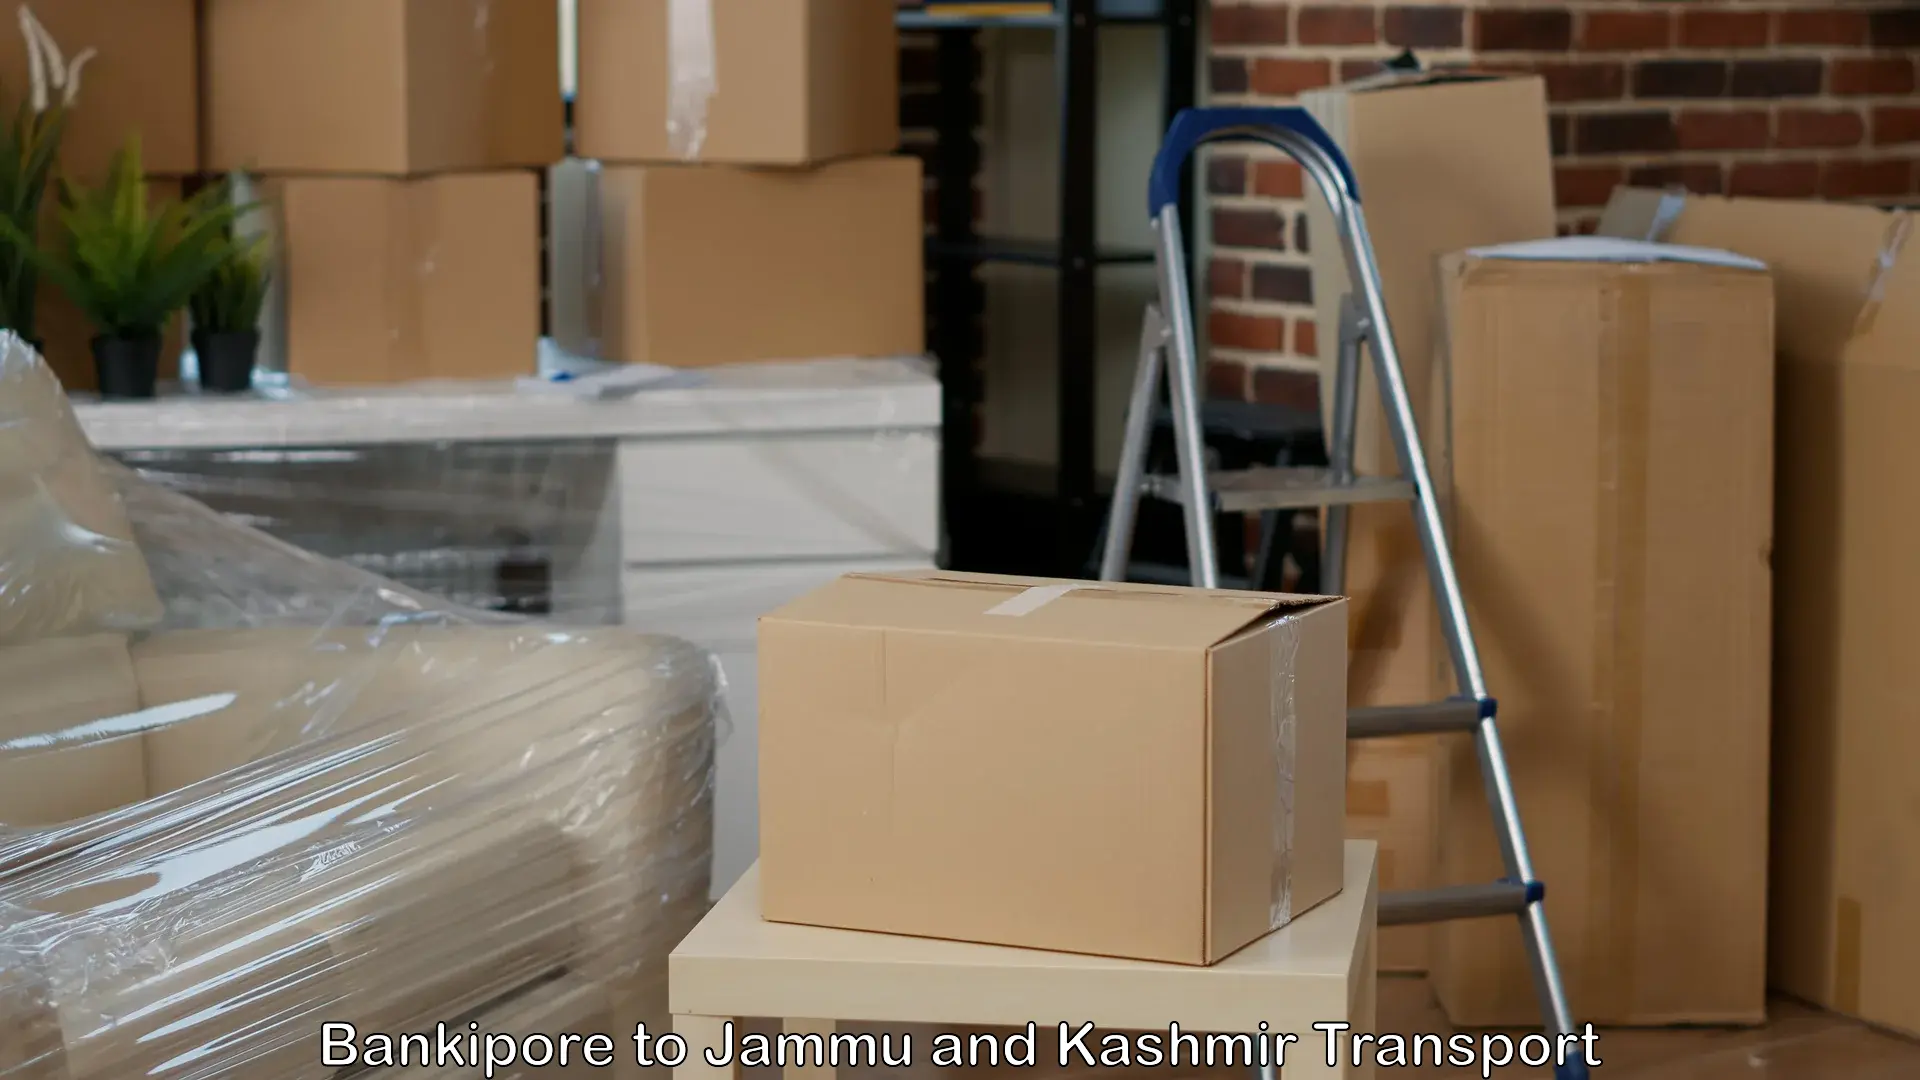 Furniture transport service Bankipore to Baramulla